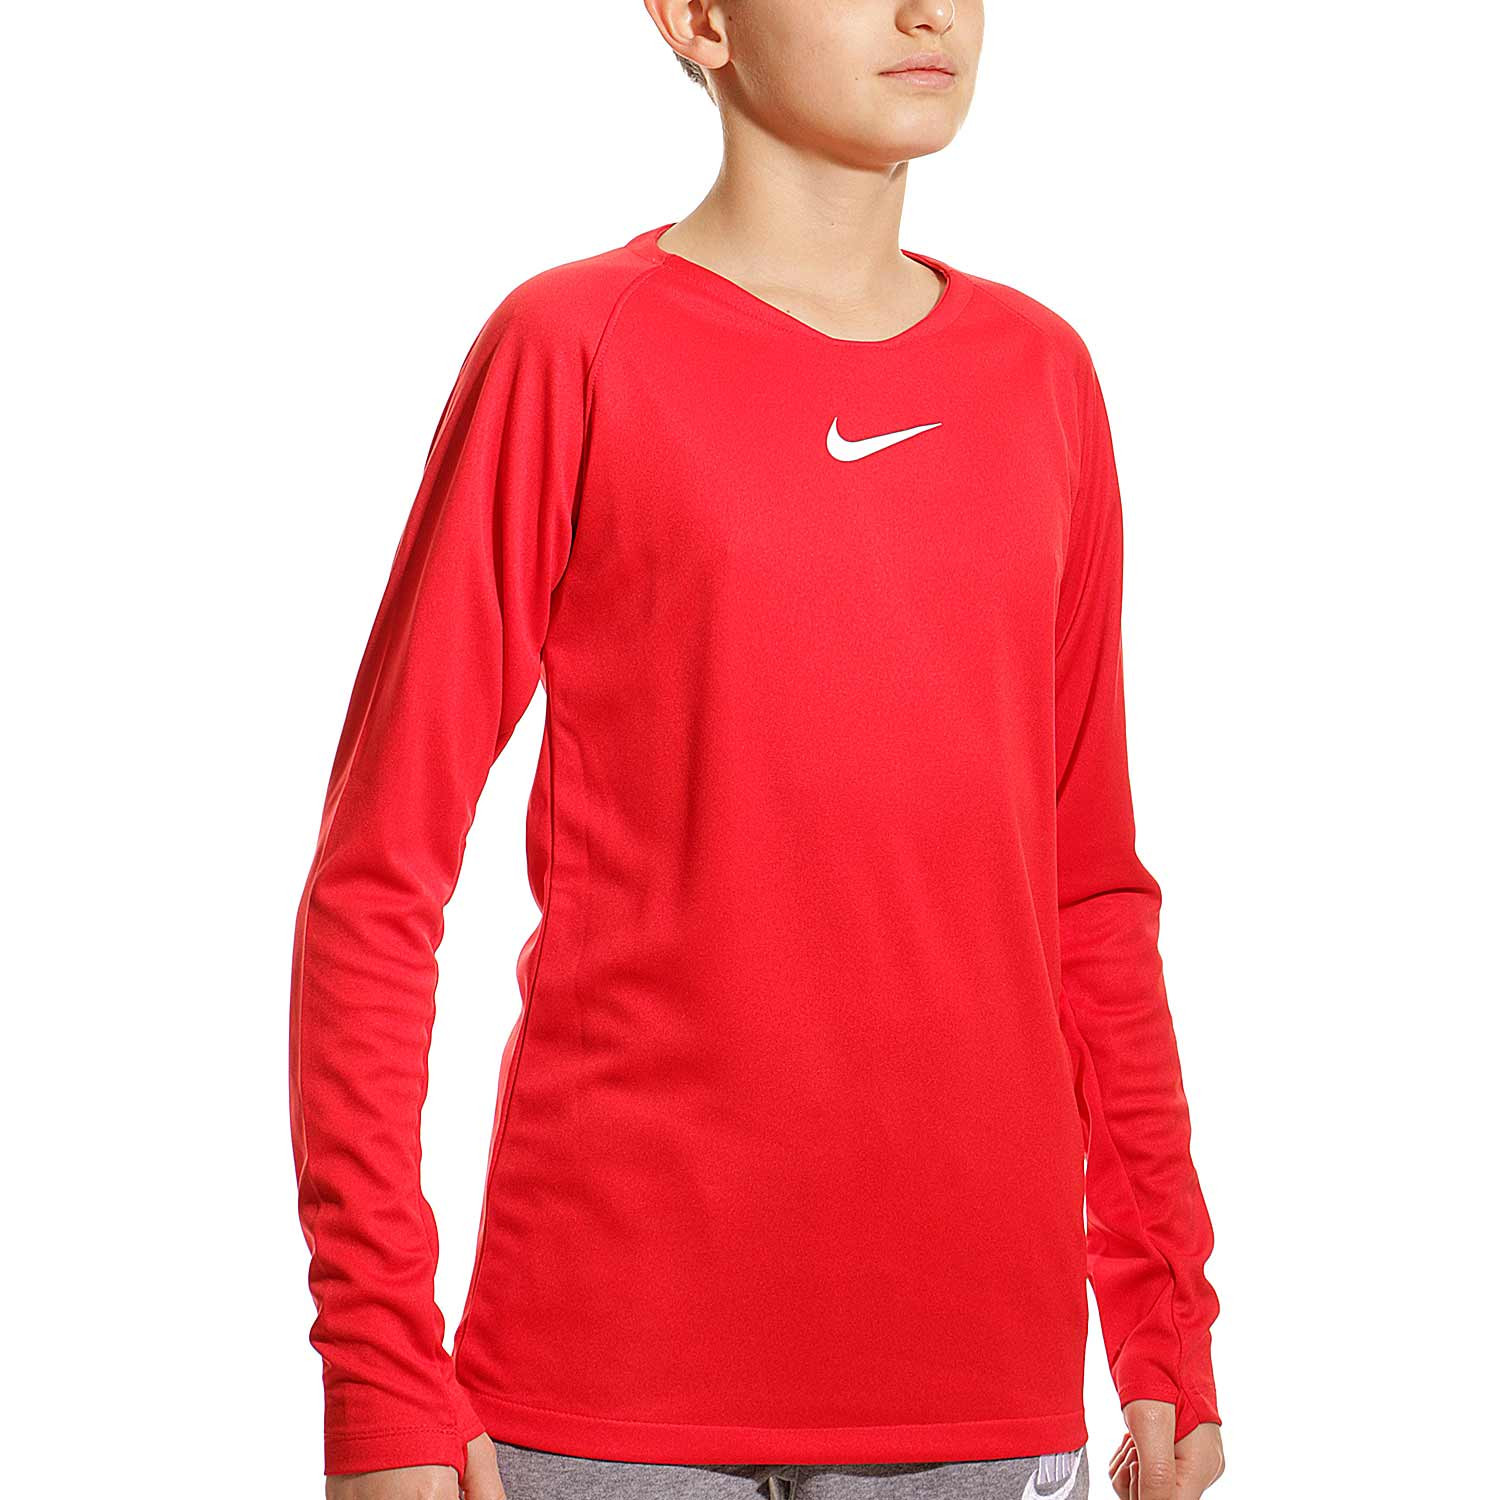 Malentendido Pais de Ciudadania expandir Camiseta térmica niño larga Nike roja |futbolmaniaKids